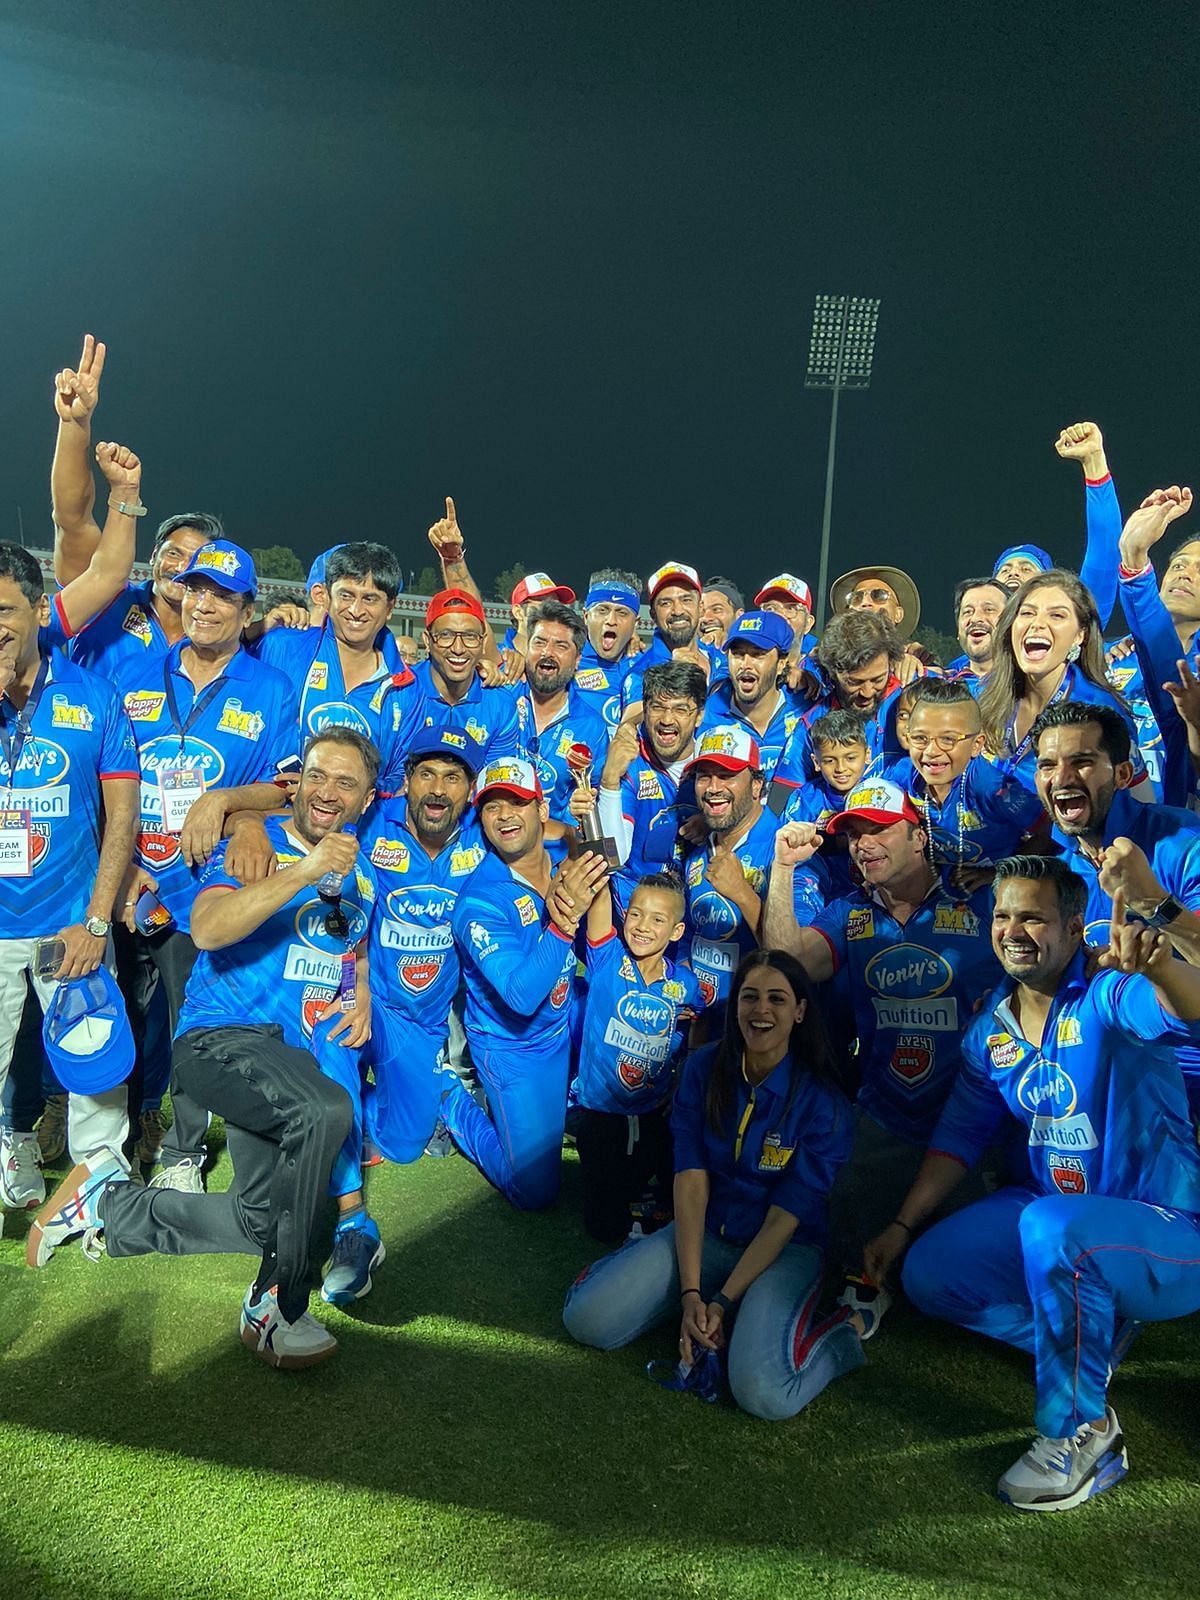 Mumbai Heroes in Celebrity cricket league. Courtesy: CCL 